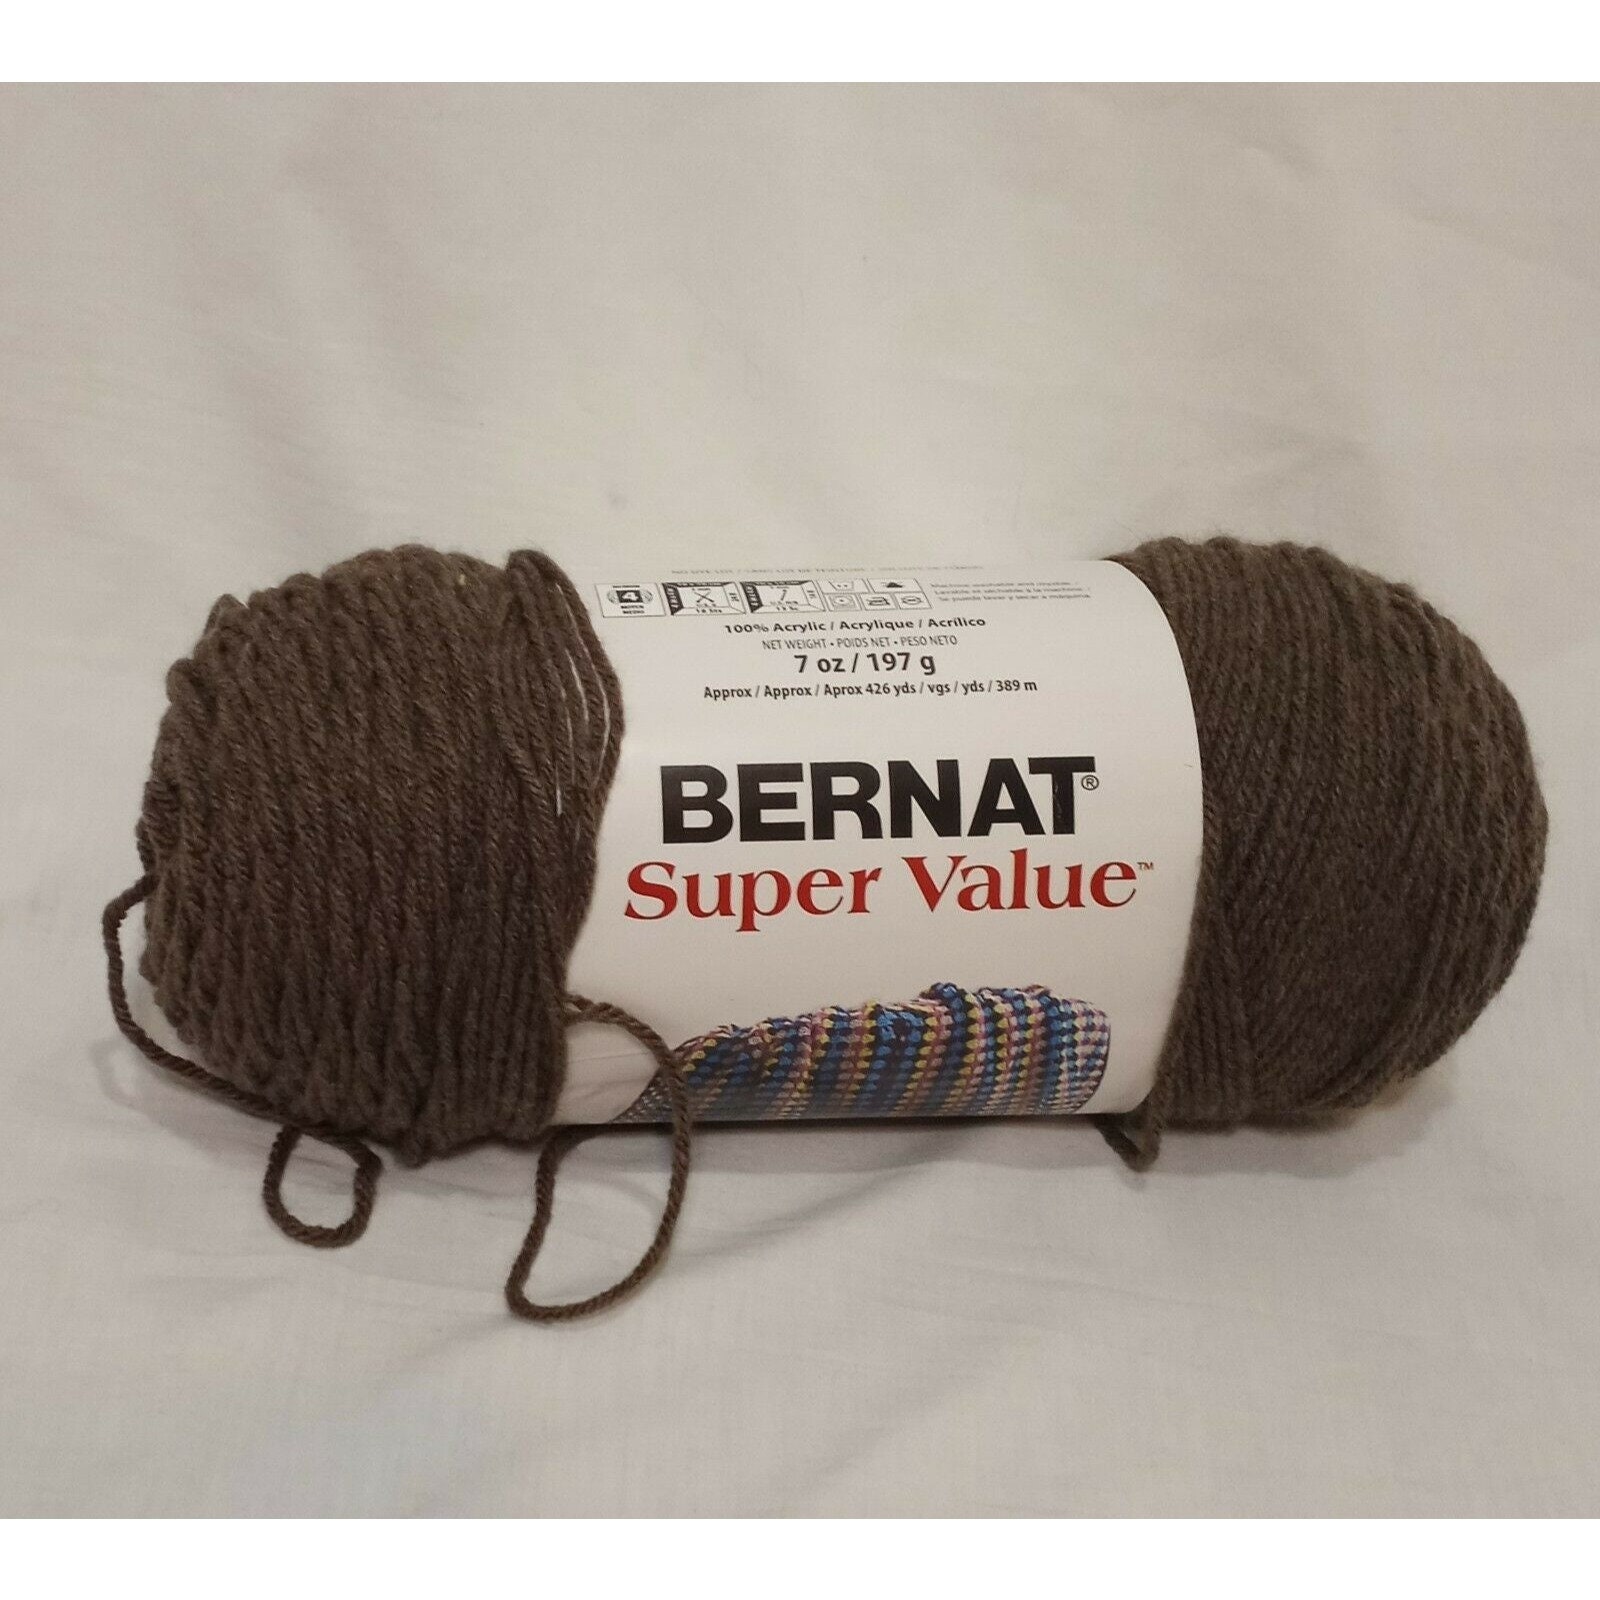 Bernat Super Value Taupe Yarn - 3 Pack of 198g/7oz - Acrylic - 4 Medium (Worsted) - 426 Yards - Knitting, Crocheting & Crafts